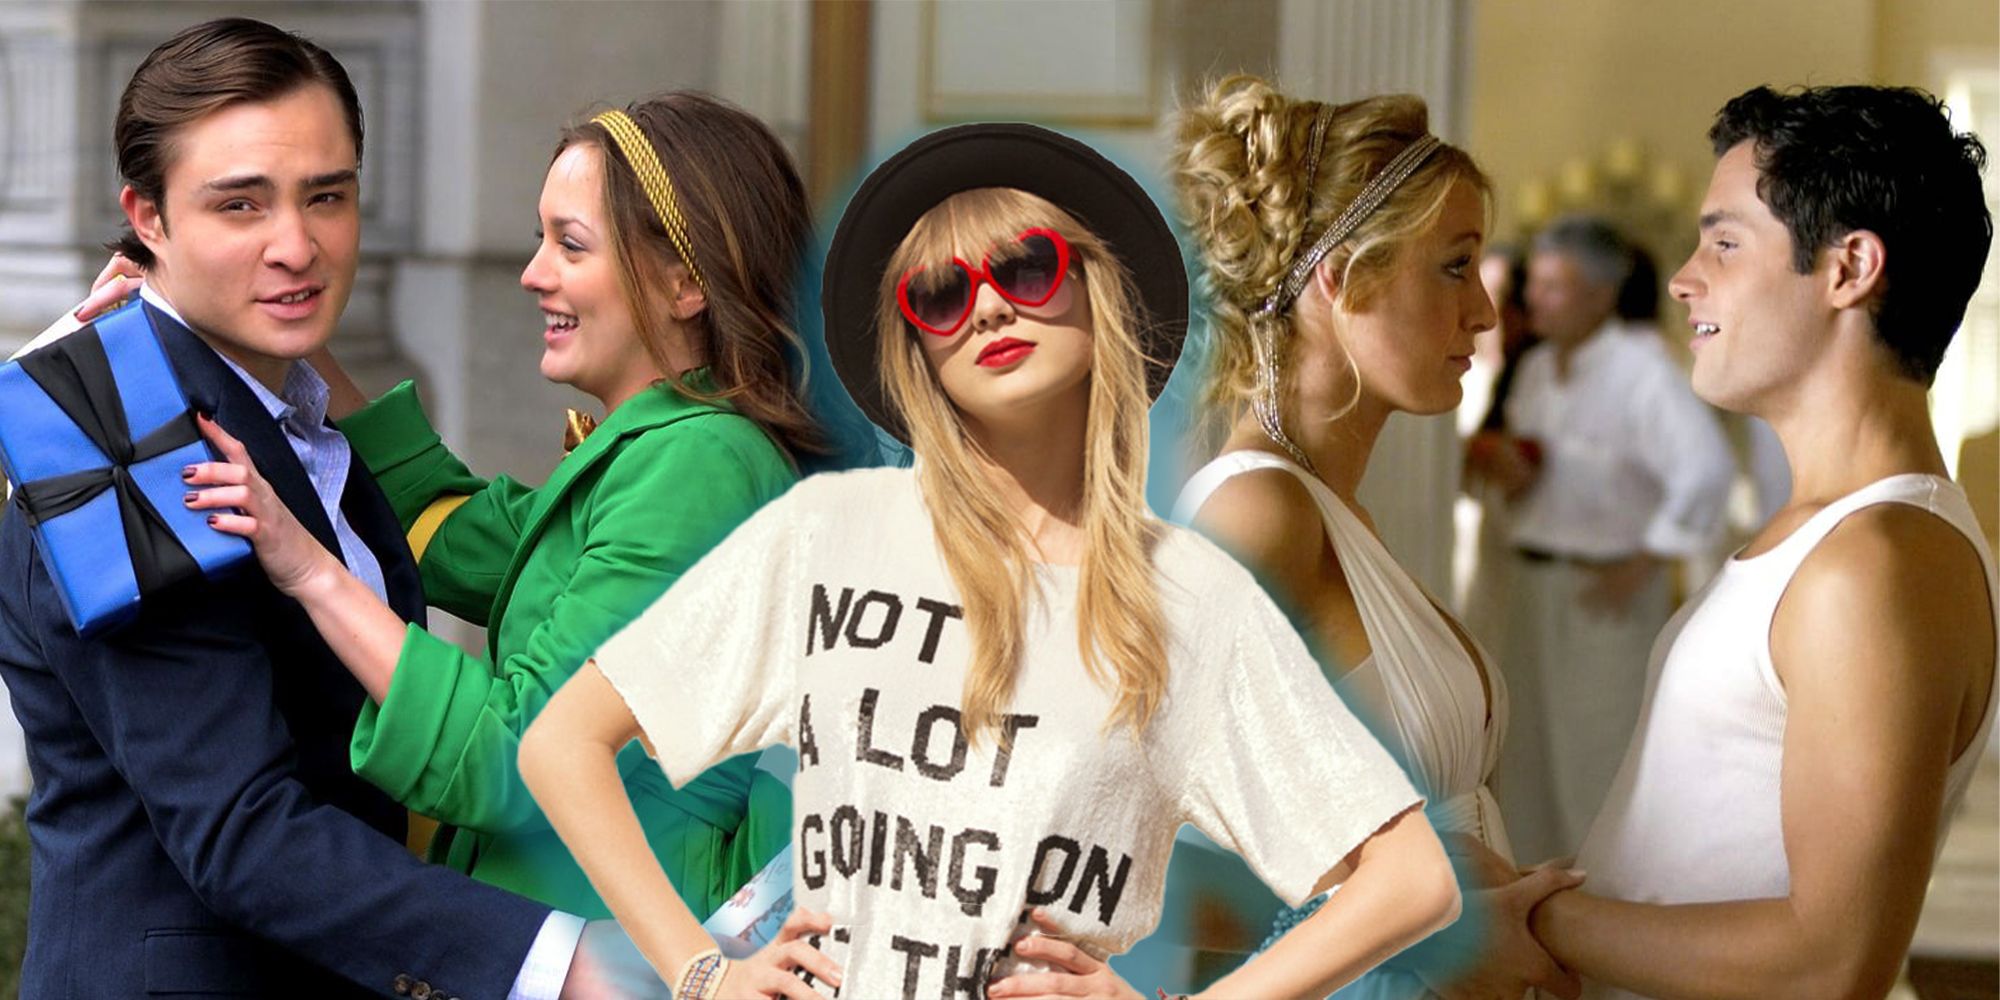 Gossip Girl Relationships As Taylor Swift Songs